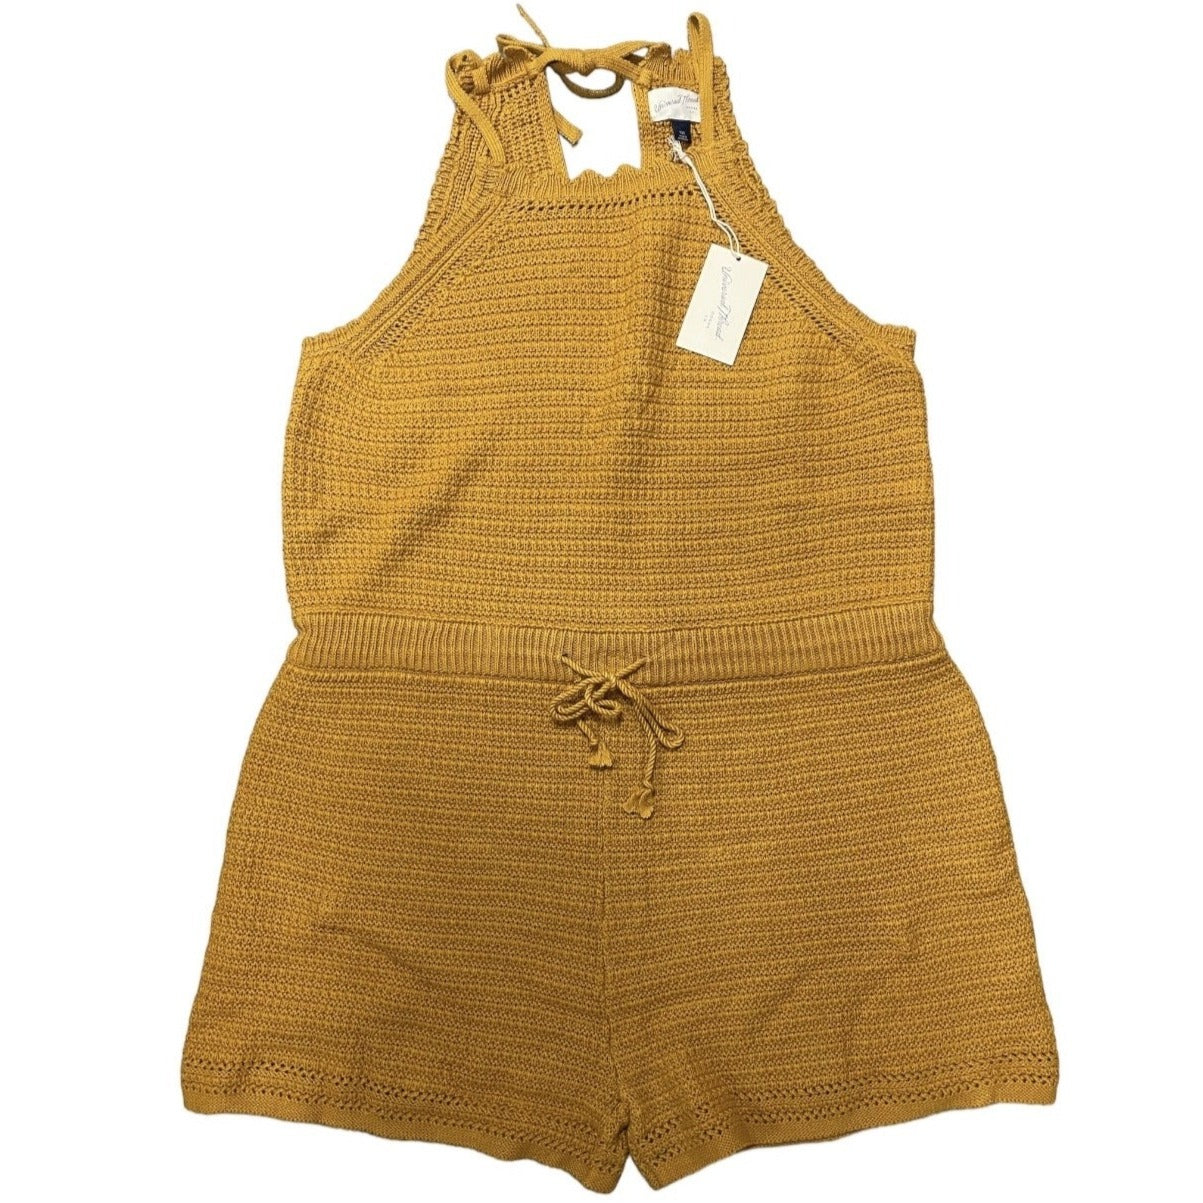 Apparel Wholesale Lot -  Universal Thread Women's Yellow Knit Romper, Sleeveless Drawstring, Assorted Sizes - 11 Units